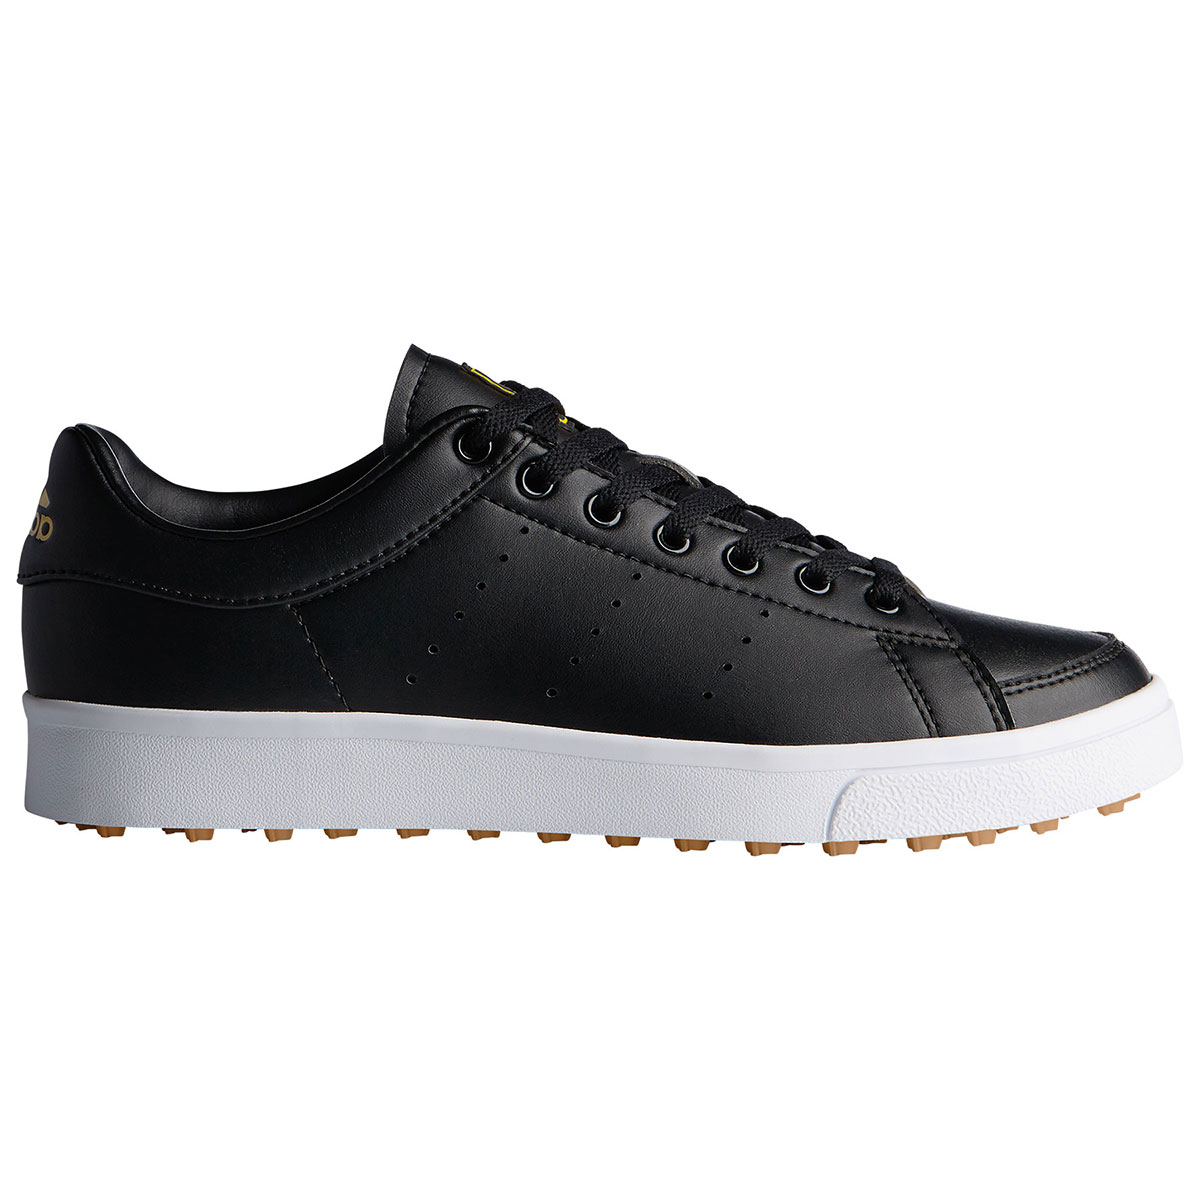 adidas adicross classic leather golf shoes